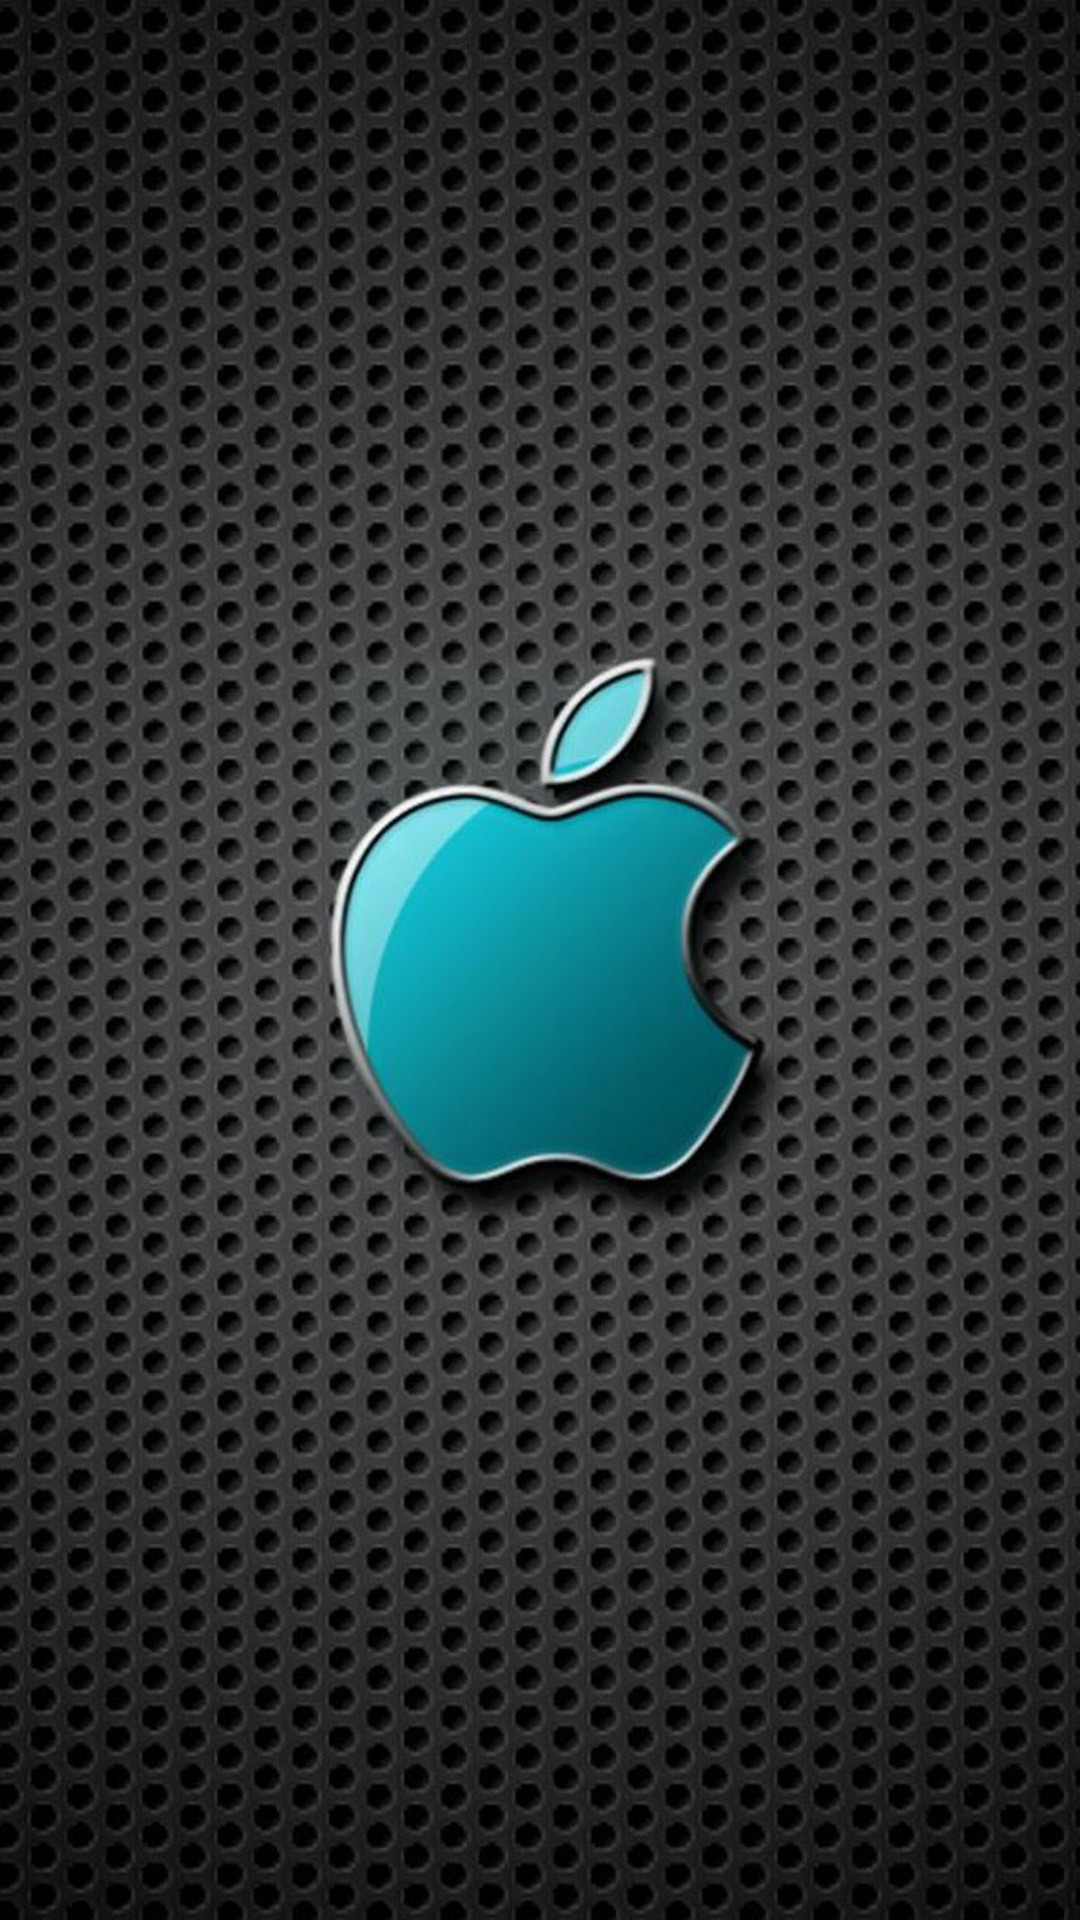 1080x1920 0 Apple iPhonePlus Wallpapers HD Apple Iphone Wallpaper HD